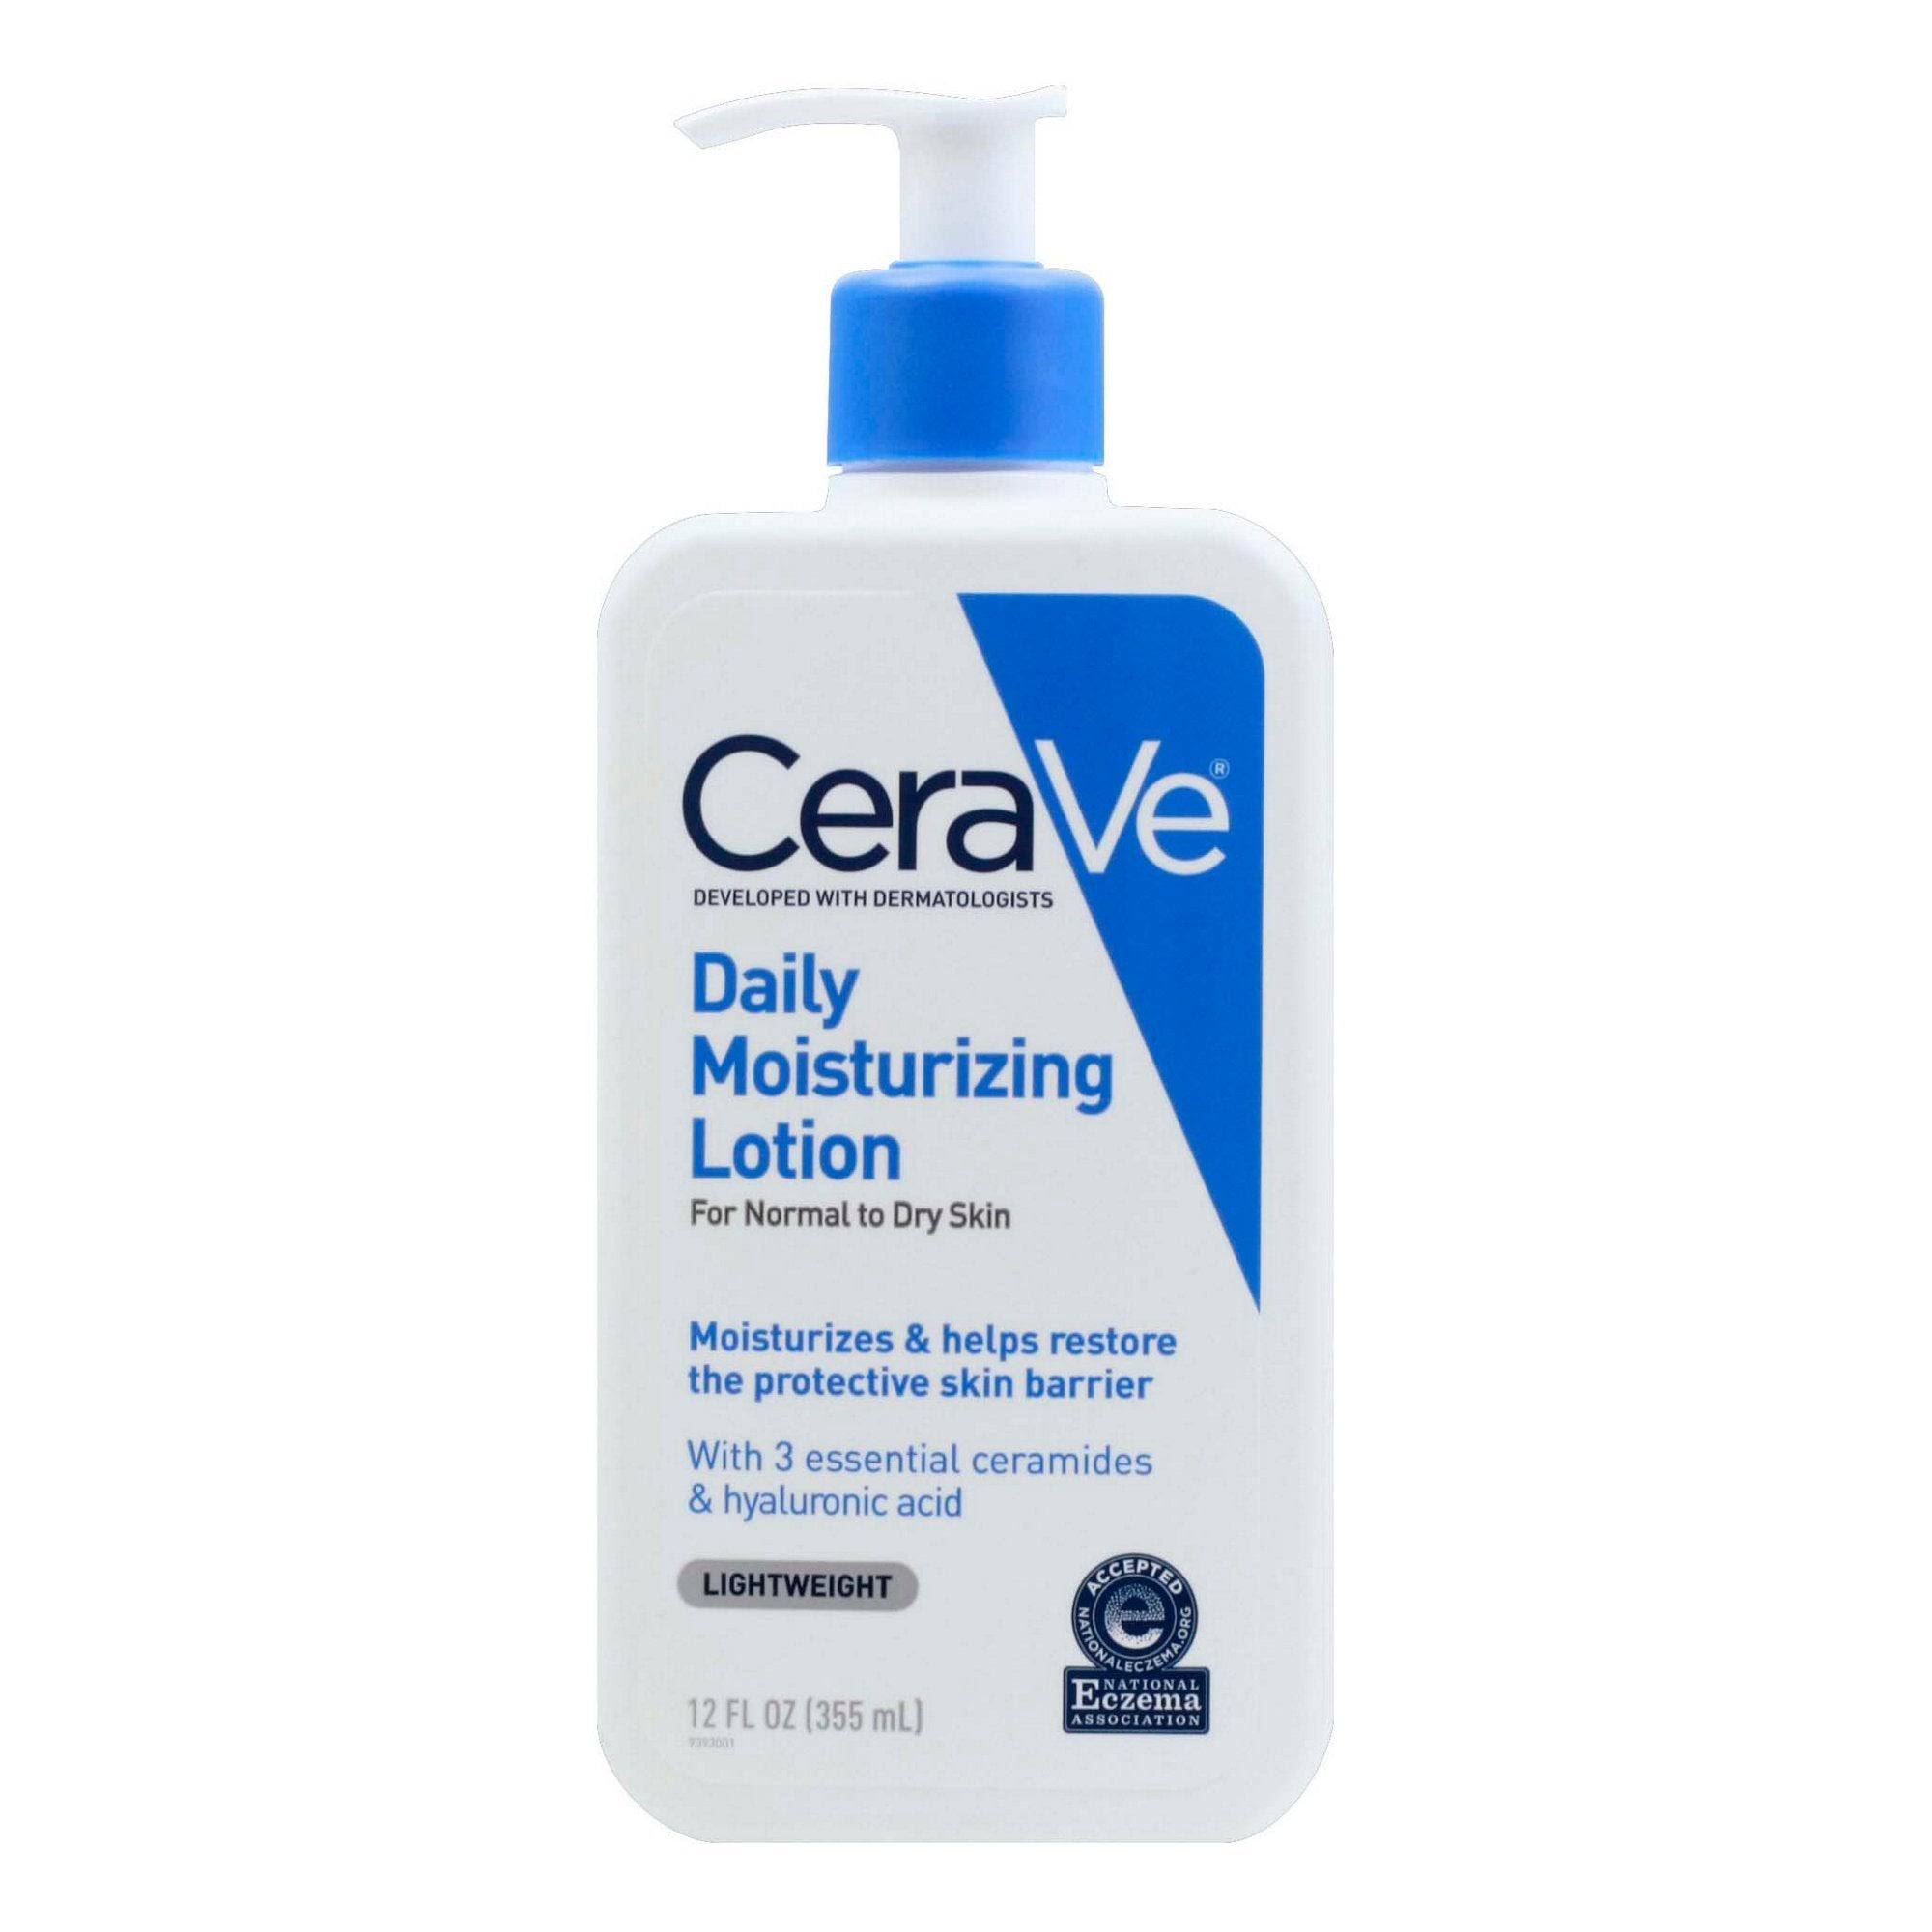 Cerave Moisturizing Cream for Normal to Dry Skin, 355 ml